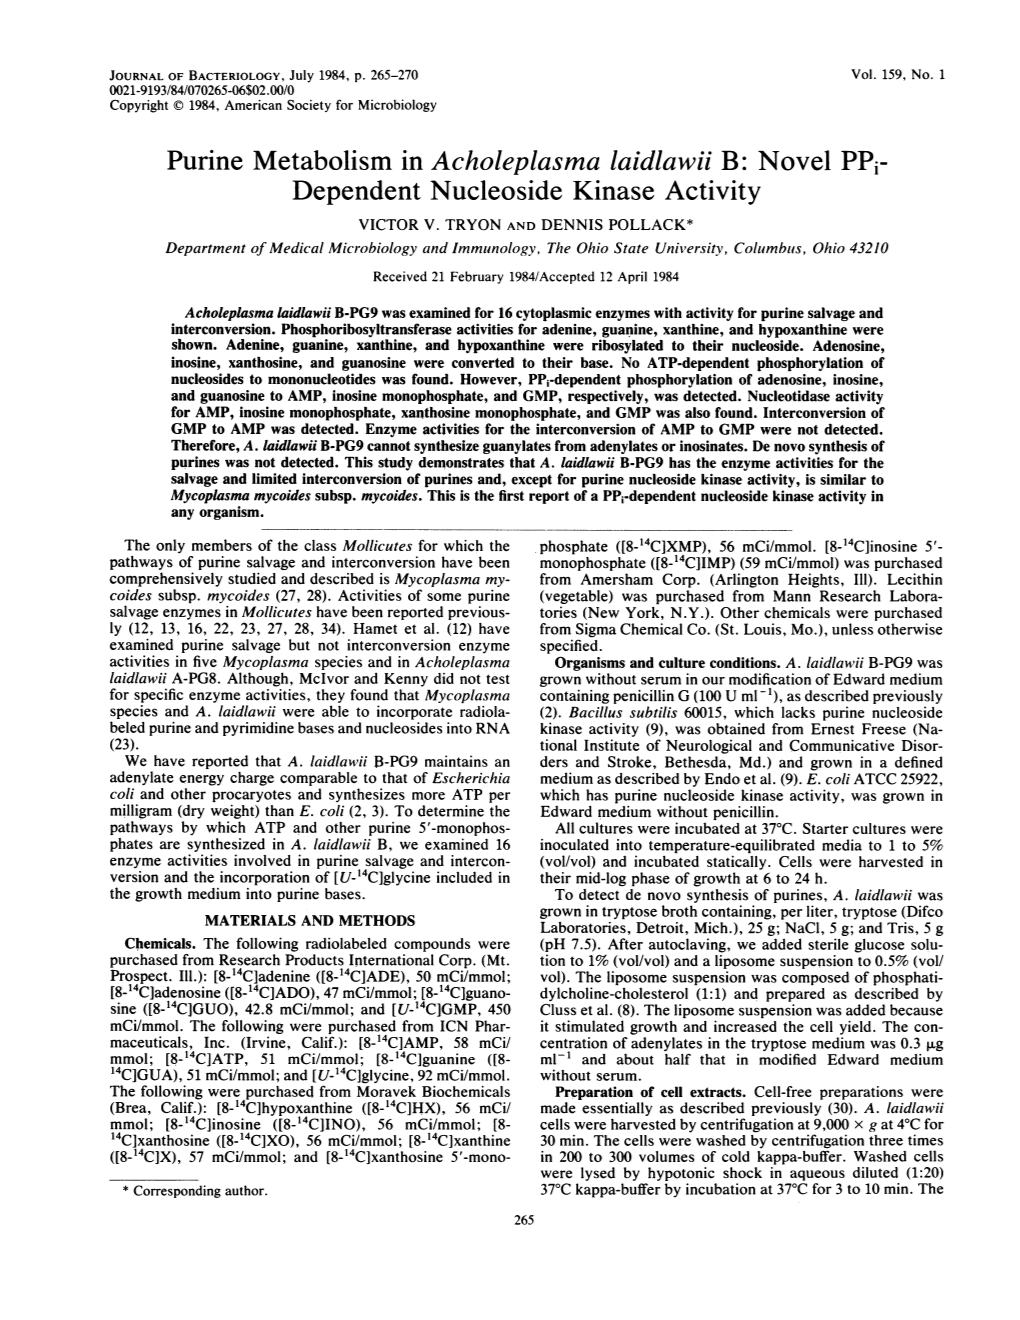 Purine Metabolism in Acholeplasma Laidlawii B: Novel Ppi- Dependent Nucleoside Kinase Activity VICTOR V